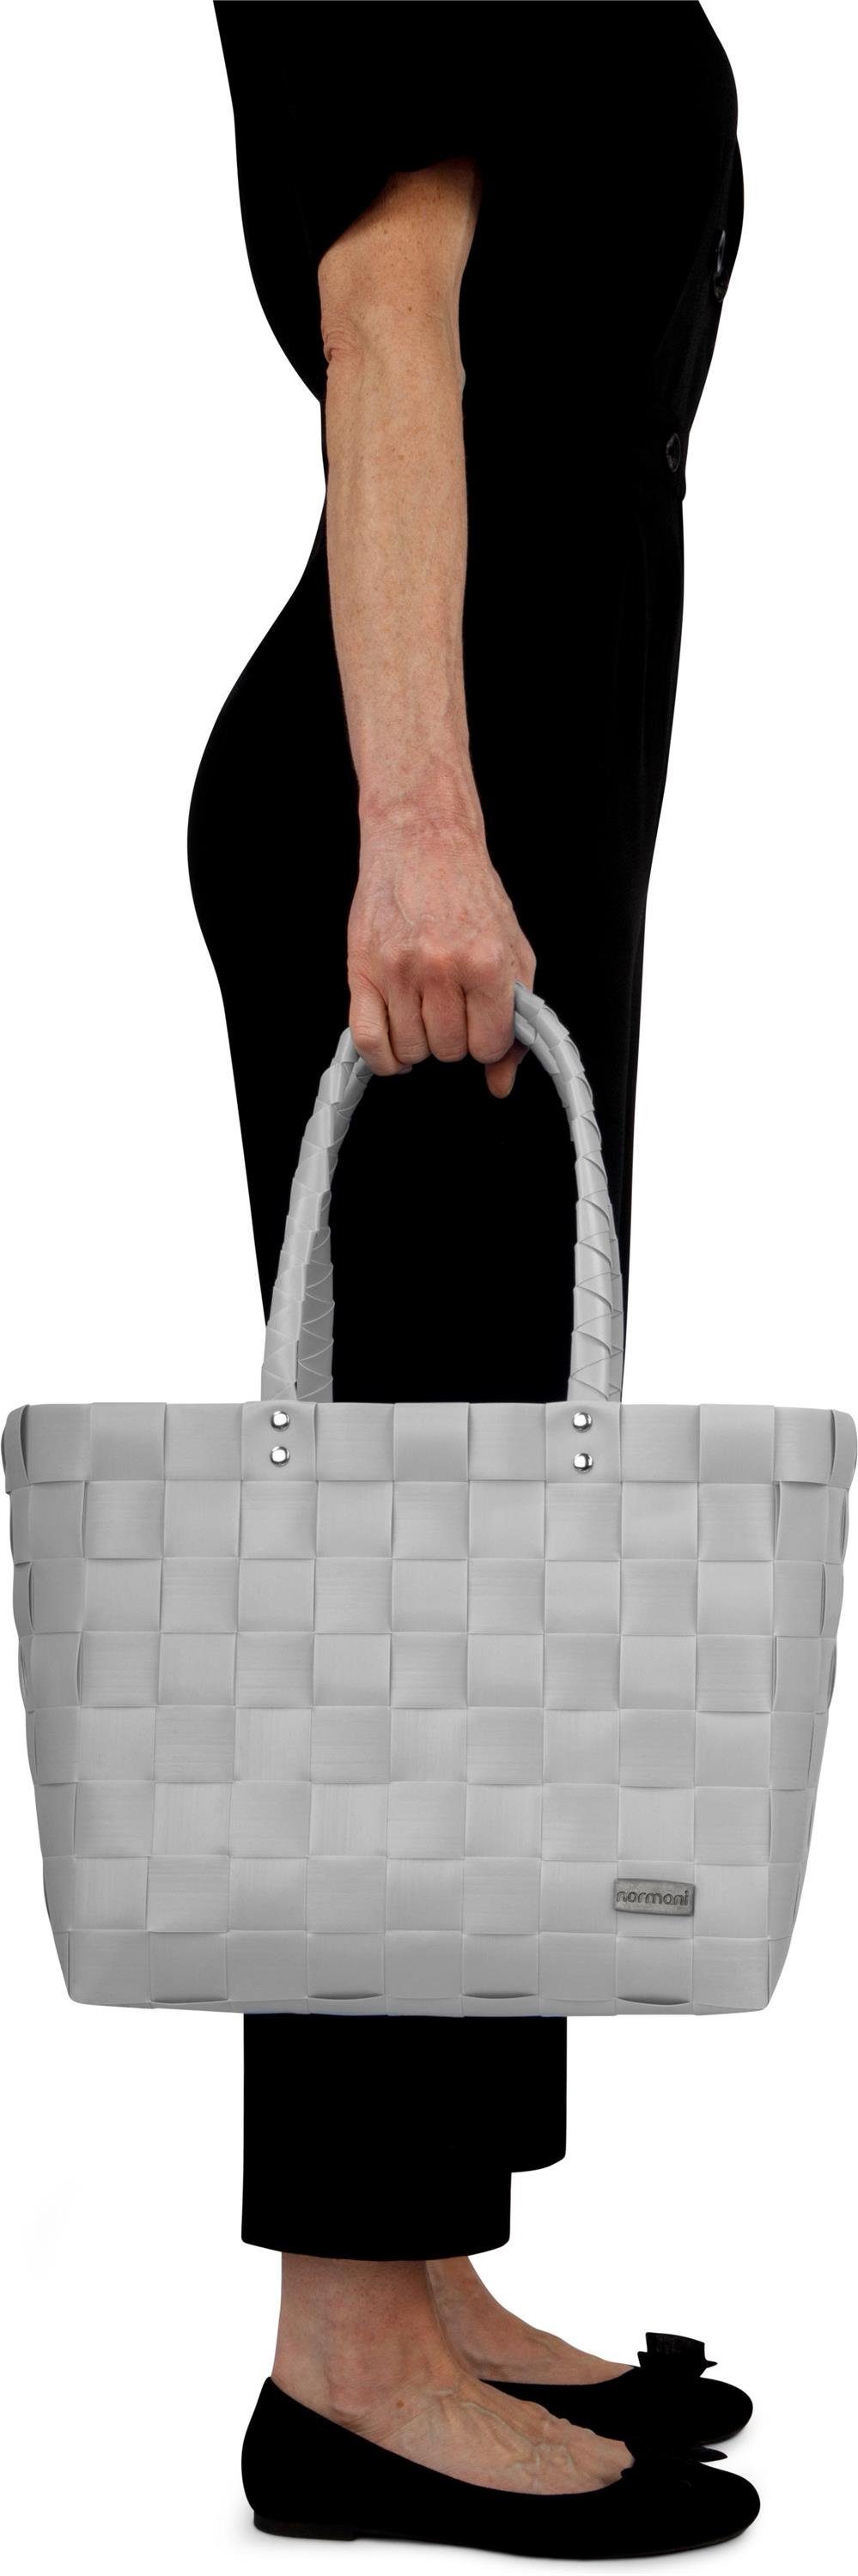 normani Einkaufskorb Einkaufskorb Einkaufstasche aus Flechtkorb aus Hellgrau l, 20 Kunststoff, pflegeleichtem Material